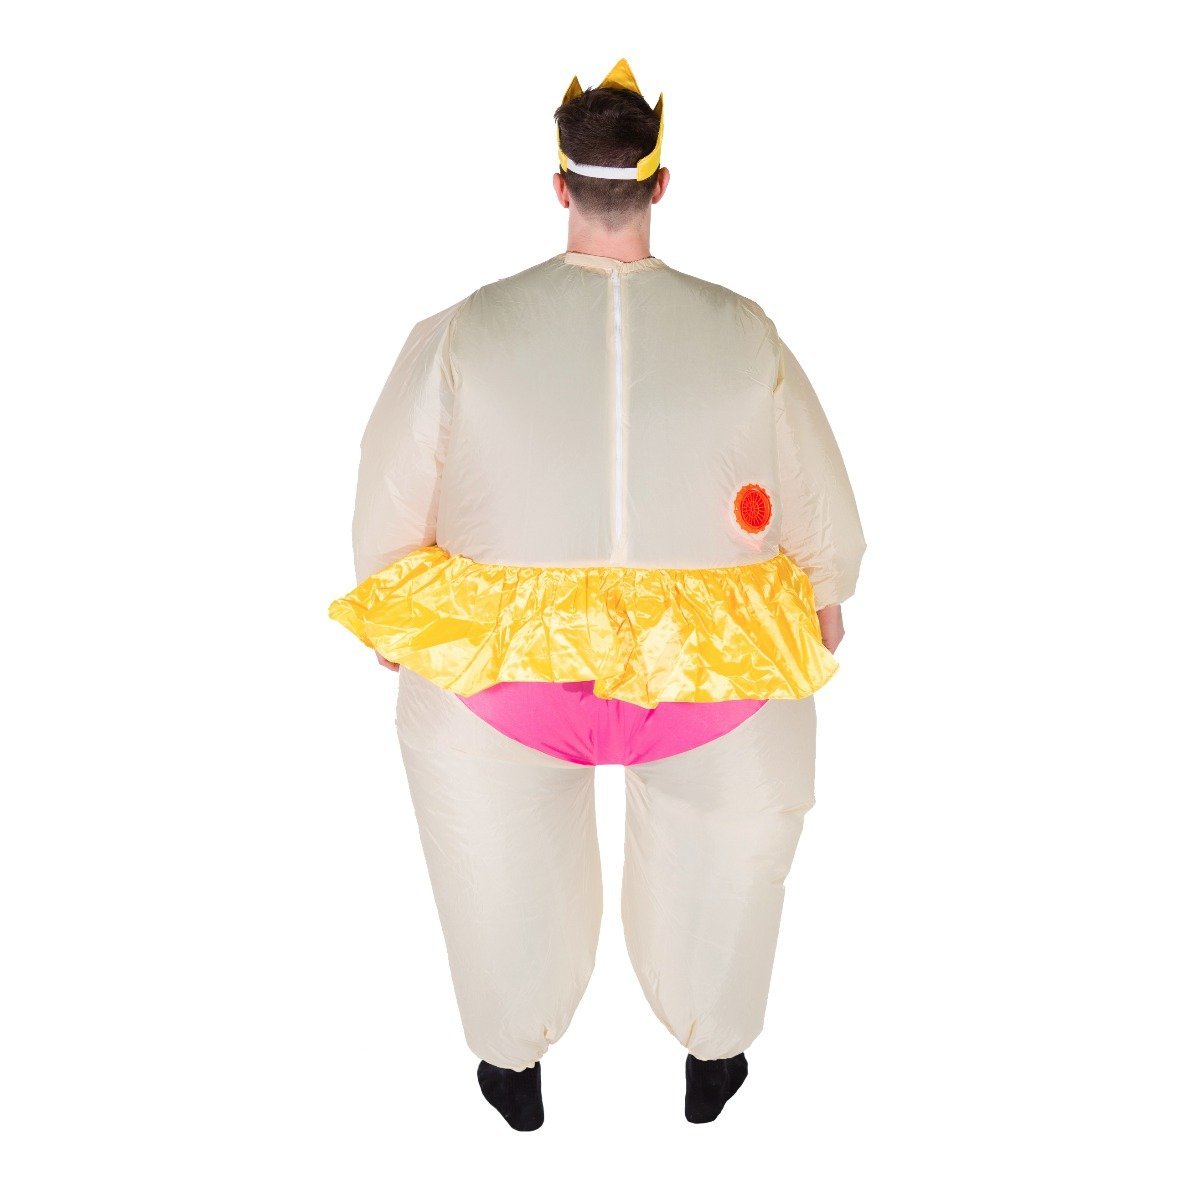 Bodysocks - Inflatable Ballerina Costume